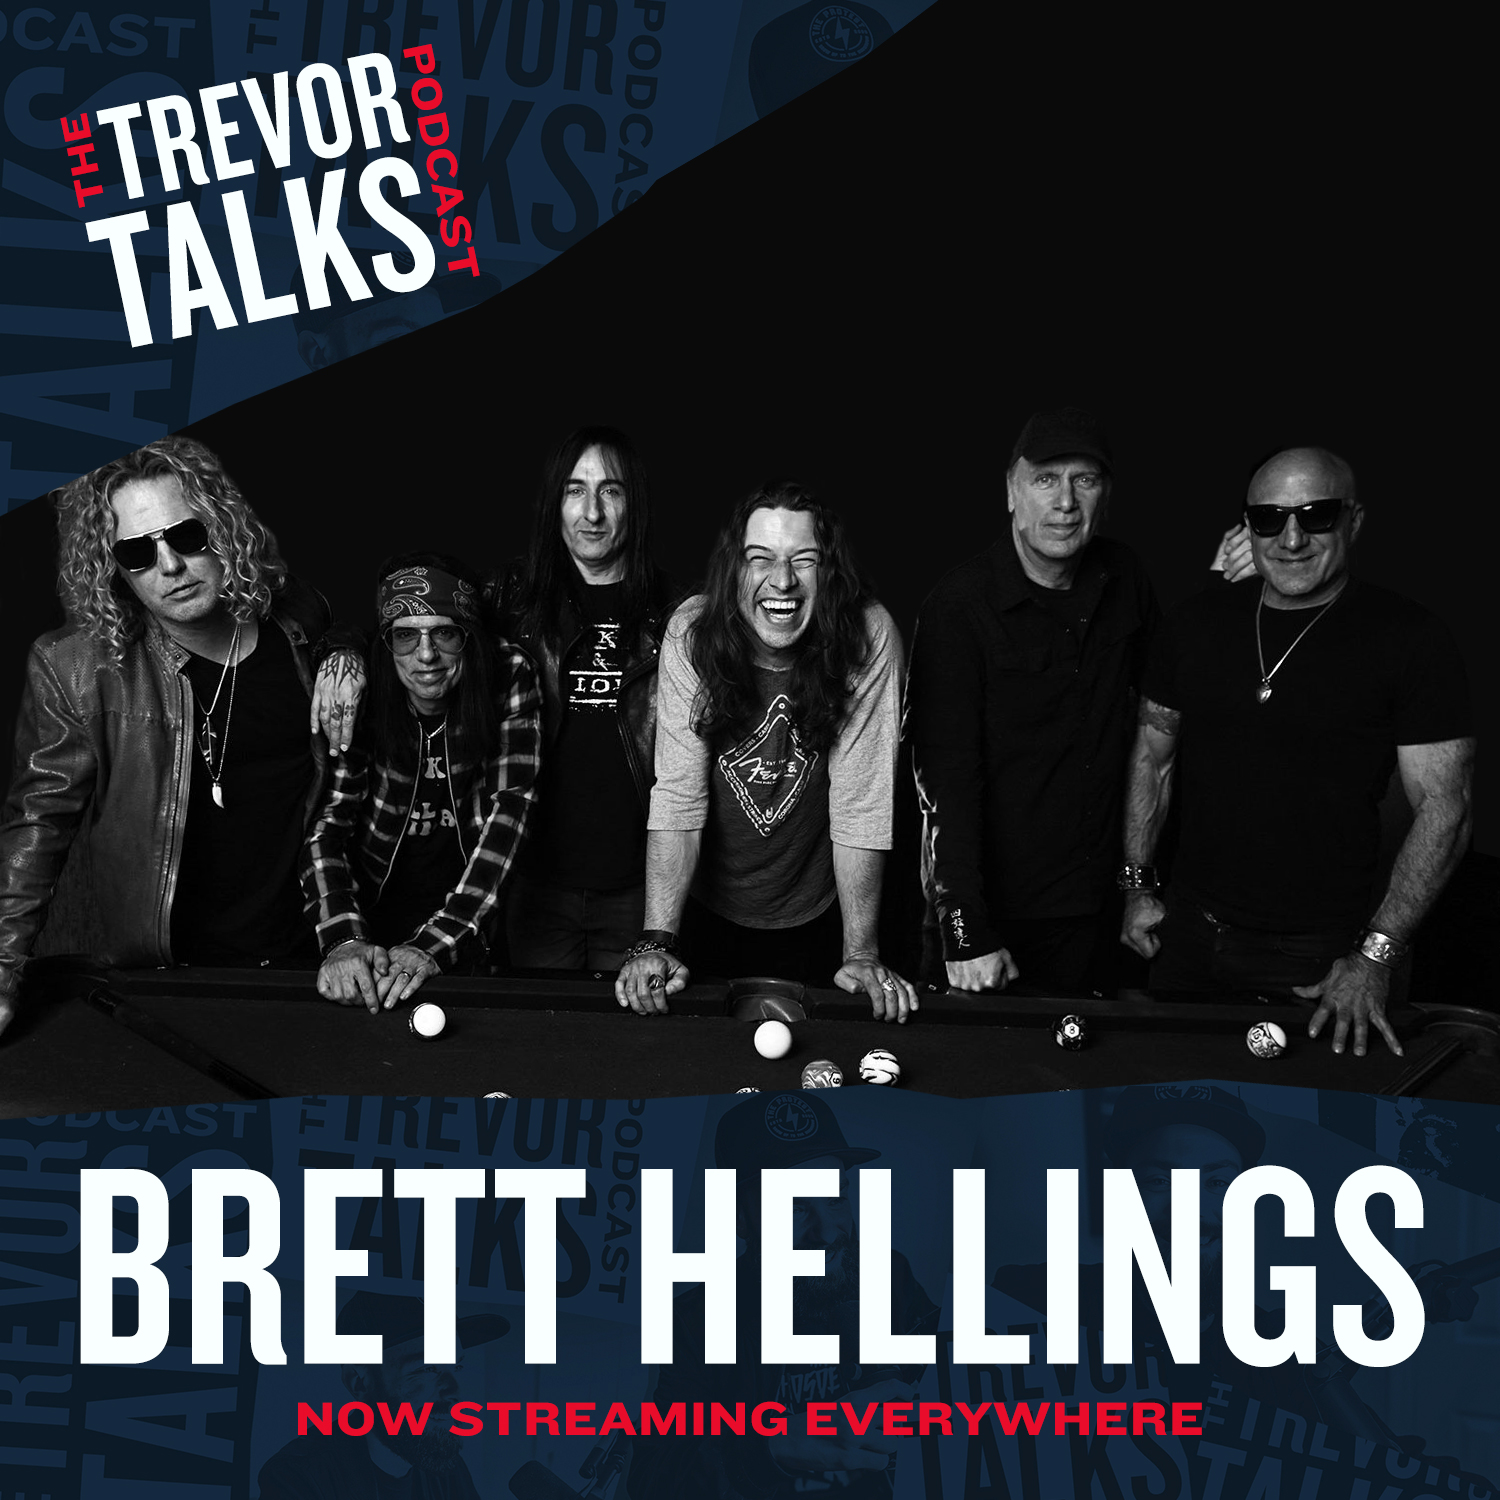 "Rock 'n' Roll Lives! Brett Hellings Talks Making Music with Guns N' Roses, Aerosmith & More